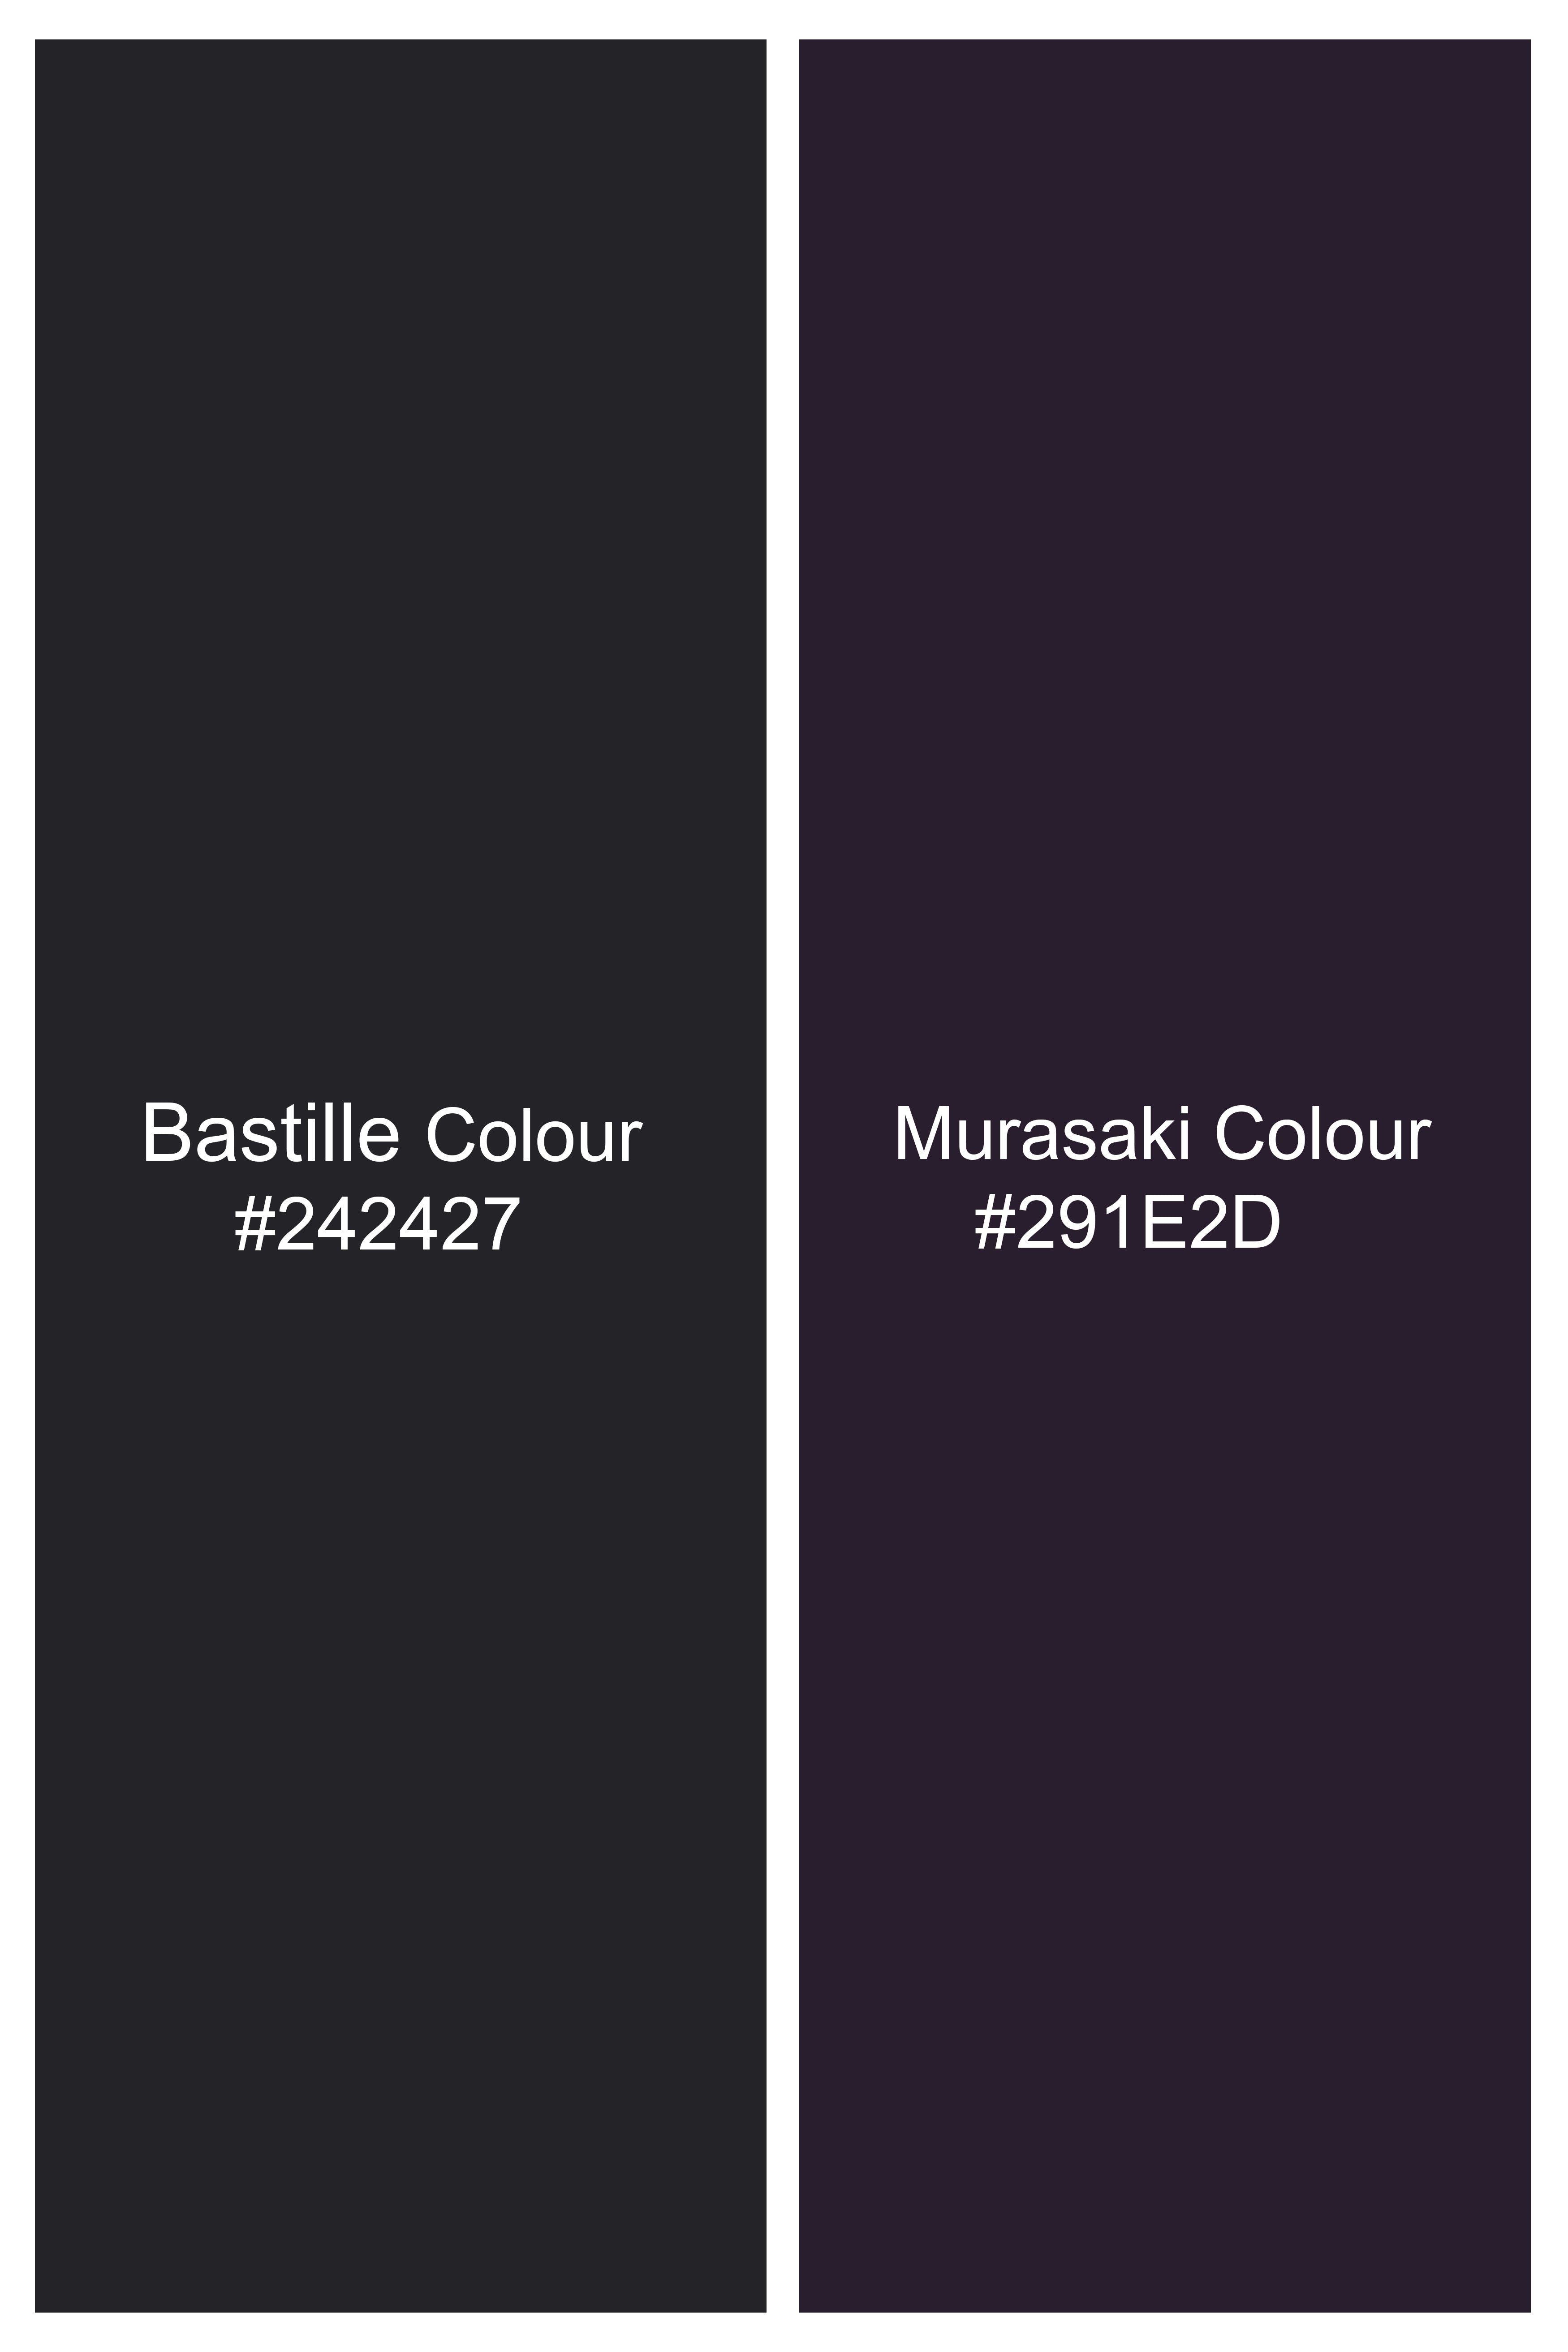 Bastille Black and Murasaki Purple Windowpane Cross Buttoned Wool Rich Bandhgala Blazer BL3063-CBG2-36, BL3063-CBG2-38, BL3063-CBG2-40, BL3063-CBG2-42, BL3063-CBG2-44, BL3063-CBG2-46, BL3063-CBG2-48, BL3063-CBG2-50, BL3063-CBG2-52, BL3063-CBG2-54, BL3063-CBG2-56, BL3063-CBG2-58, BL3063-CBG2-60